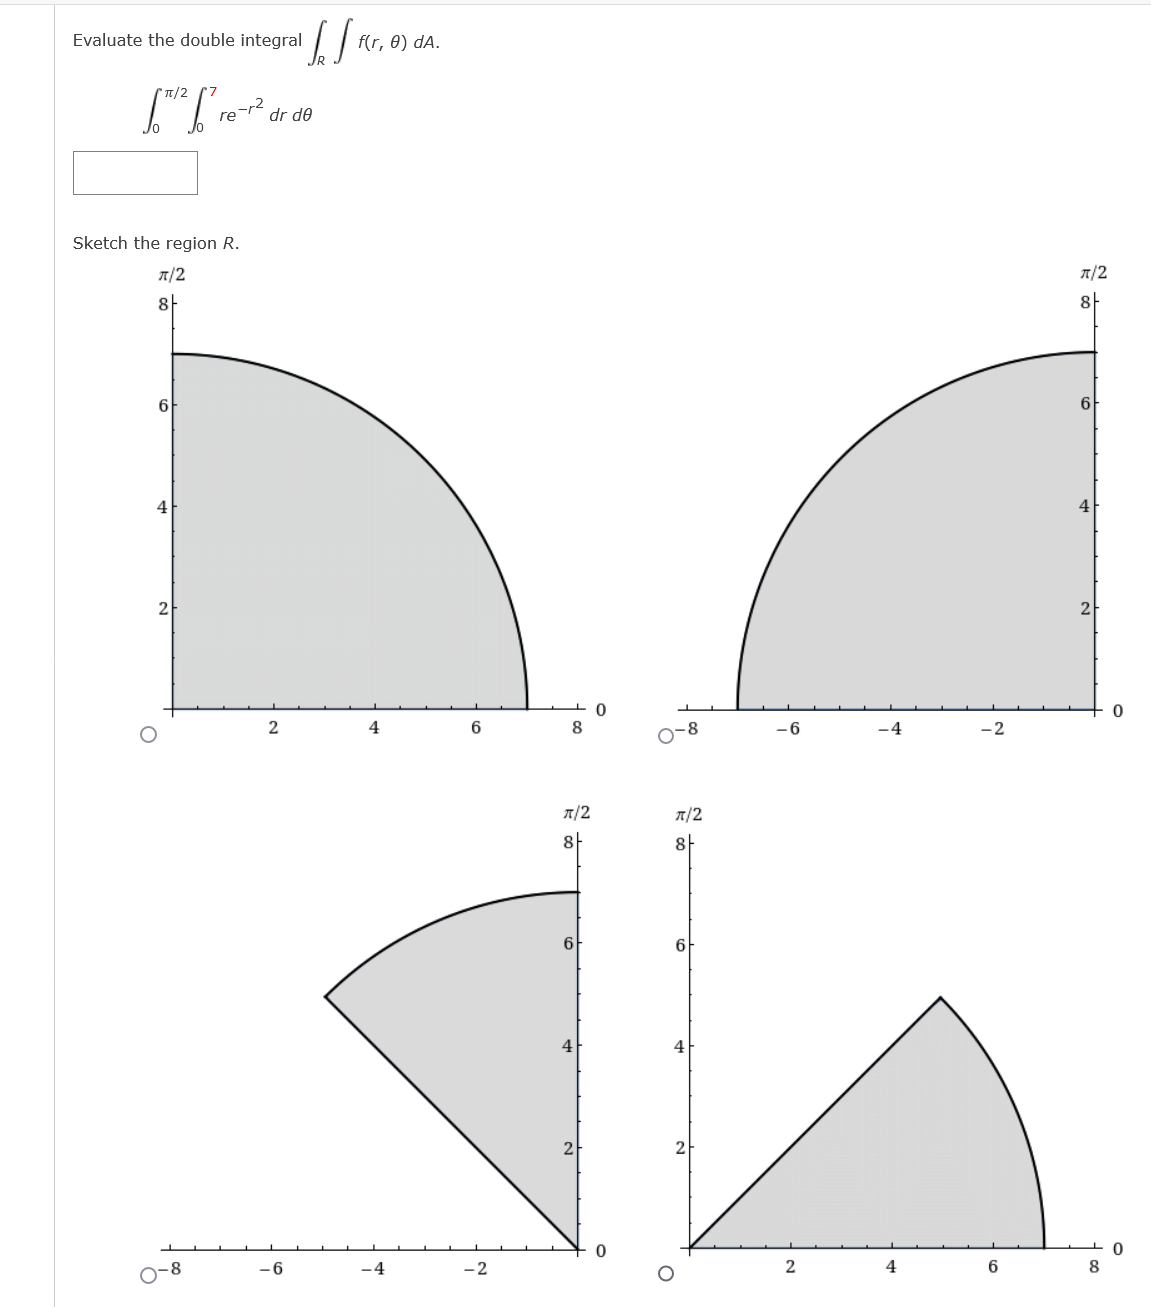 Evaluate the double integral
f(r, 0) dA.
T/2
re-r2
dr de
Sketch the region R.
A/2
7/2
6
4
4
4
6
8
o-8
-6
-4
-2
A/2
A/2
6
6
4
4
2
2
O-8
-4
-2
2
4
6
8
21
